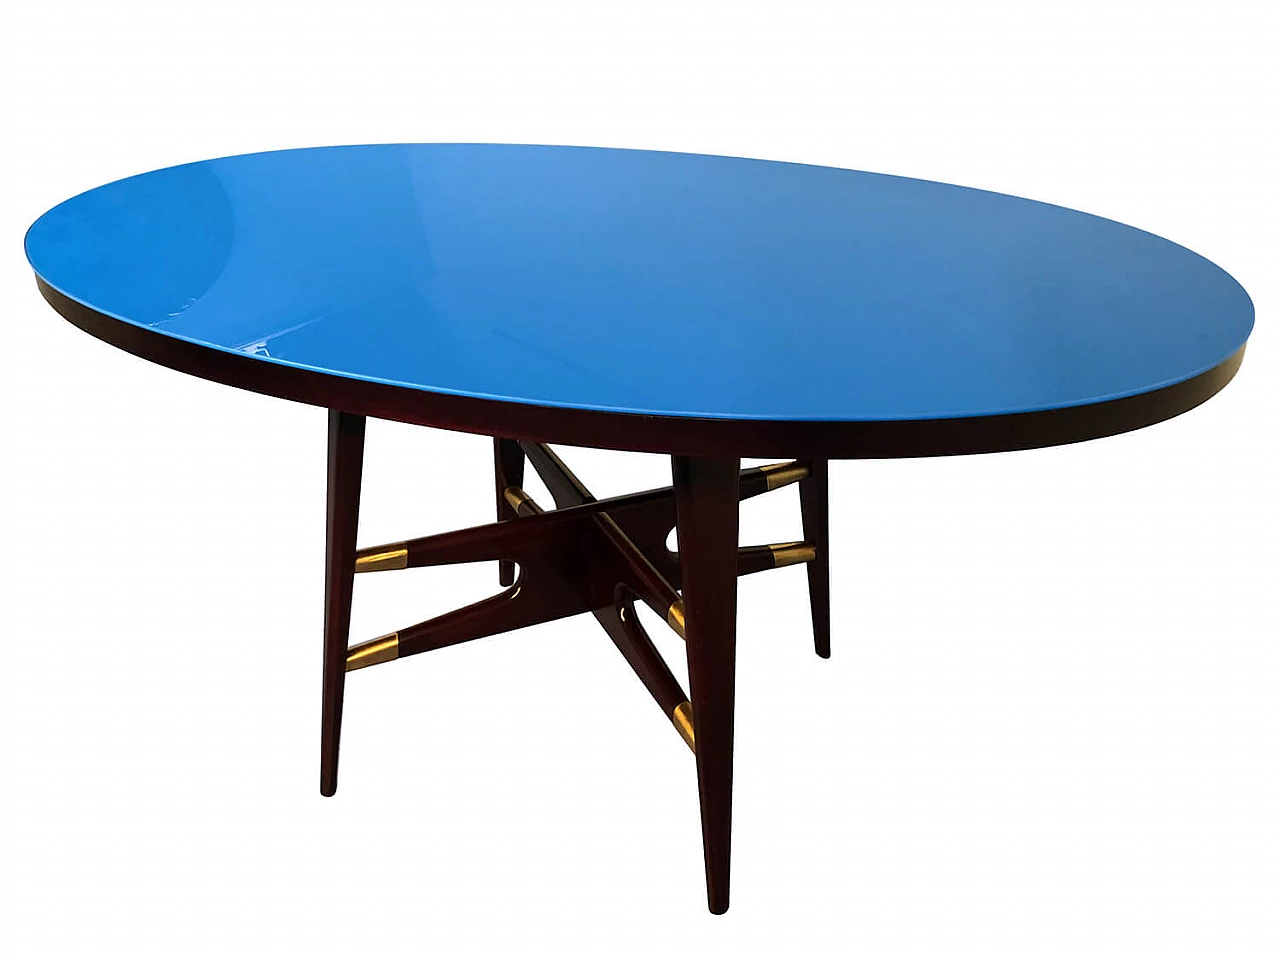 Italian blue oval dining table by Silvio Cavatorta, 50s 1137487